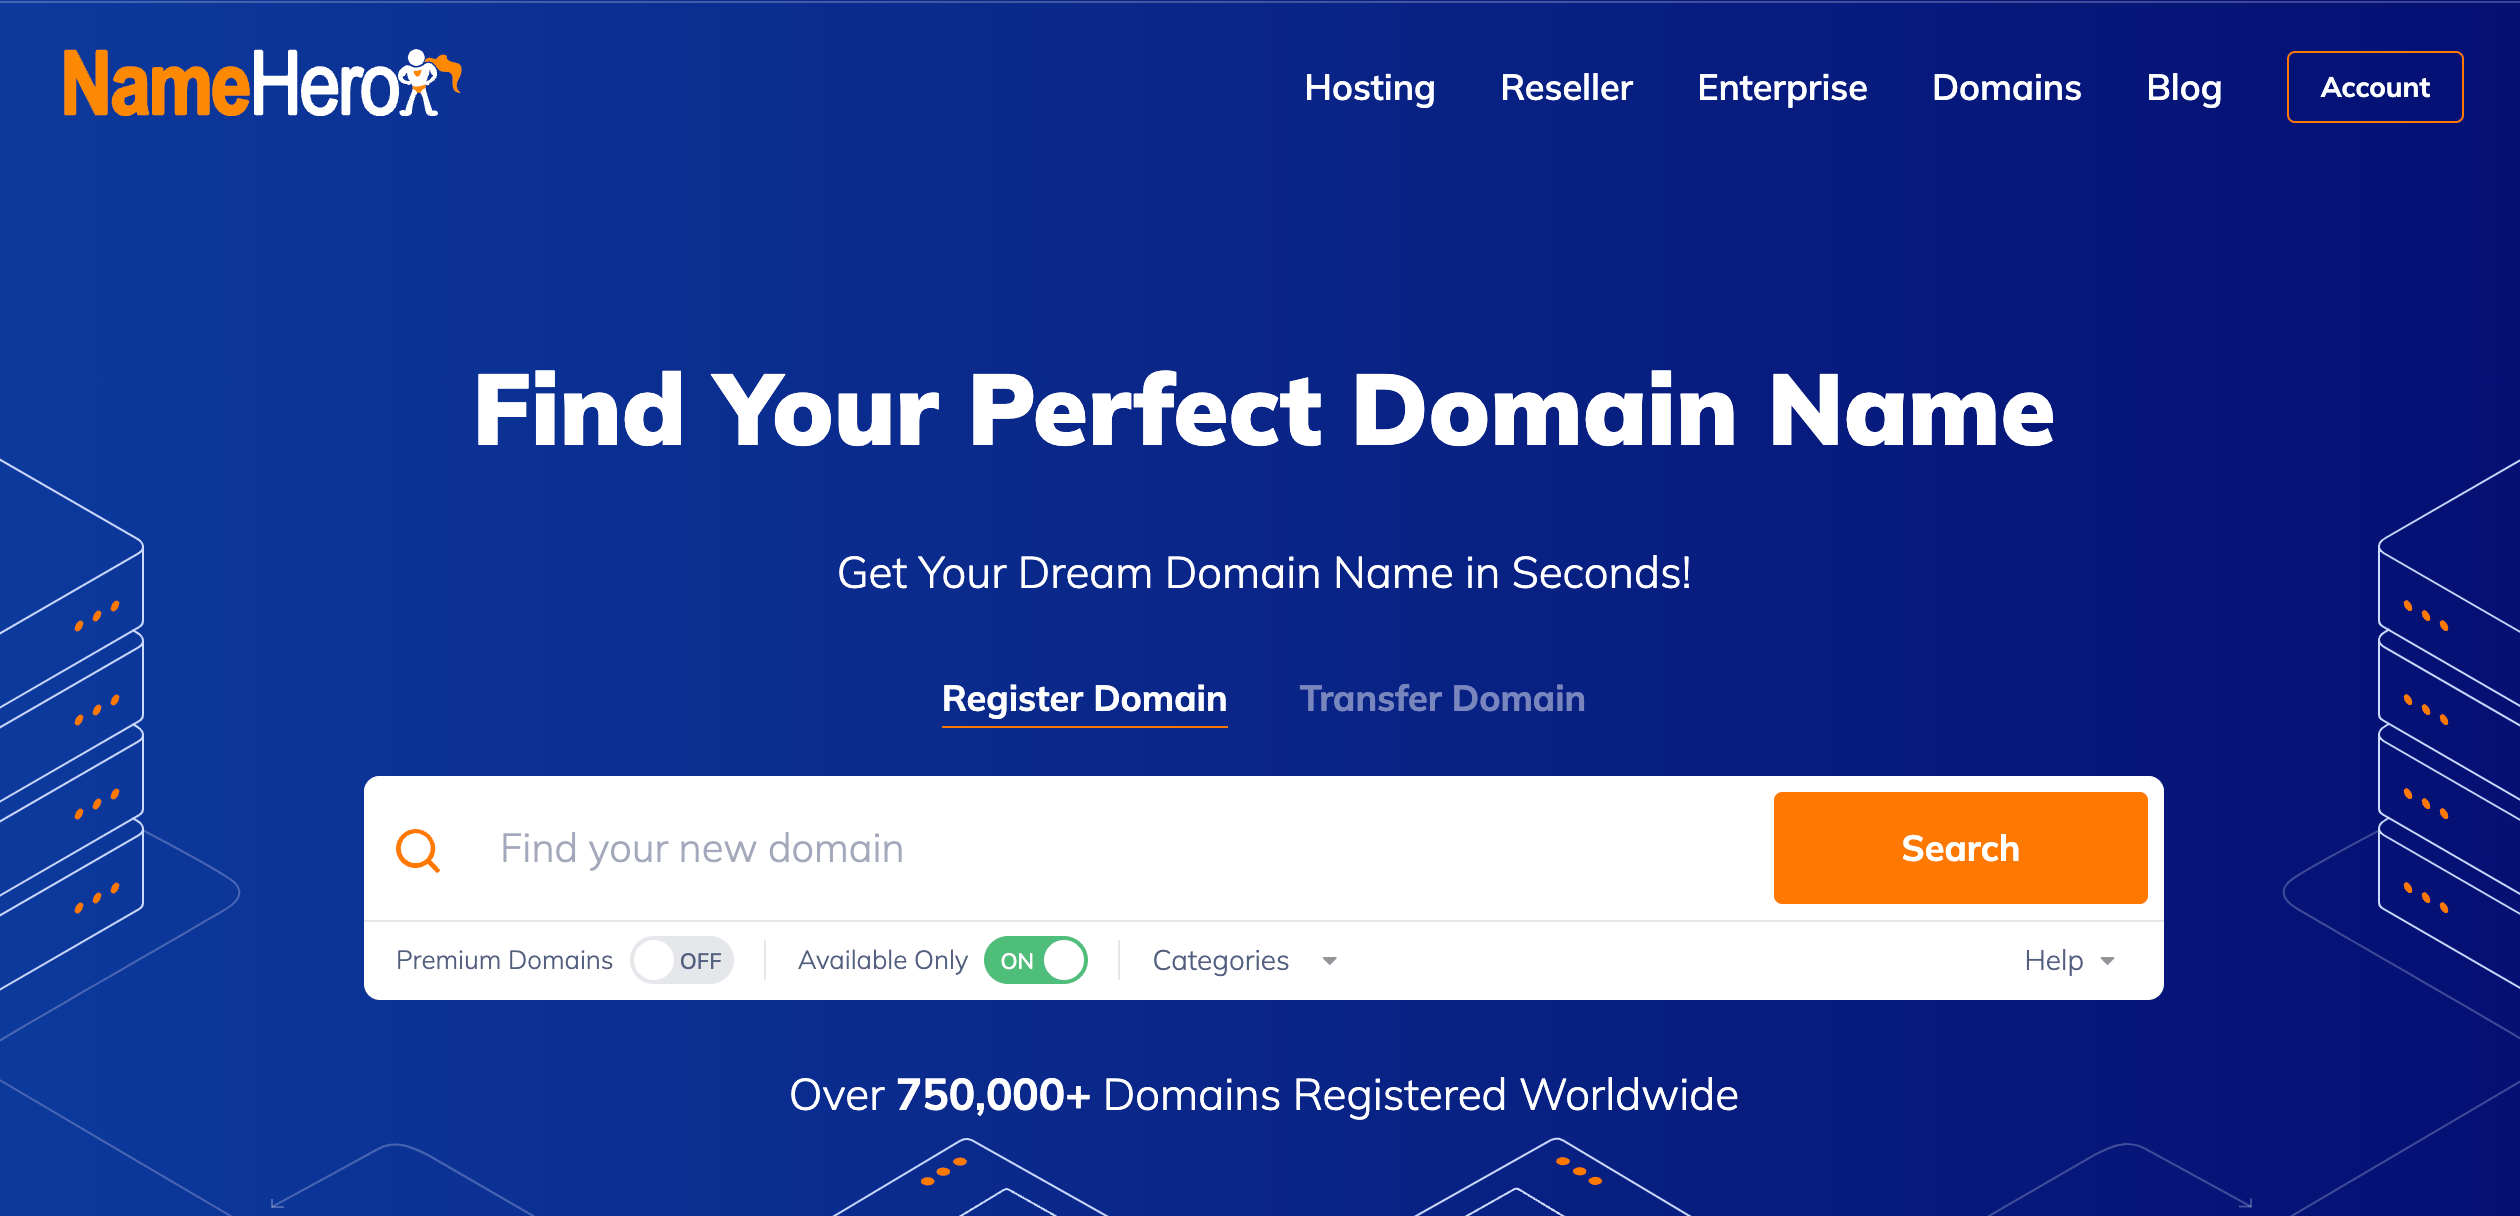 NameHero's domain registration services landing page.